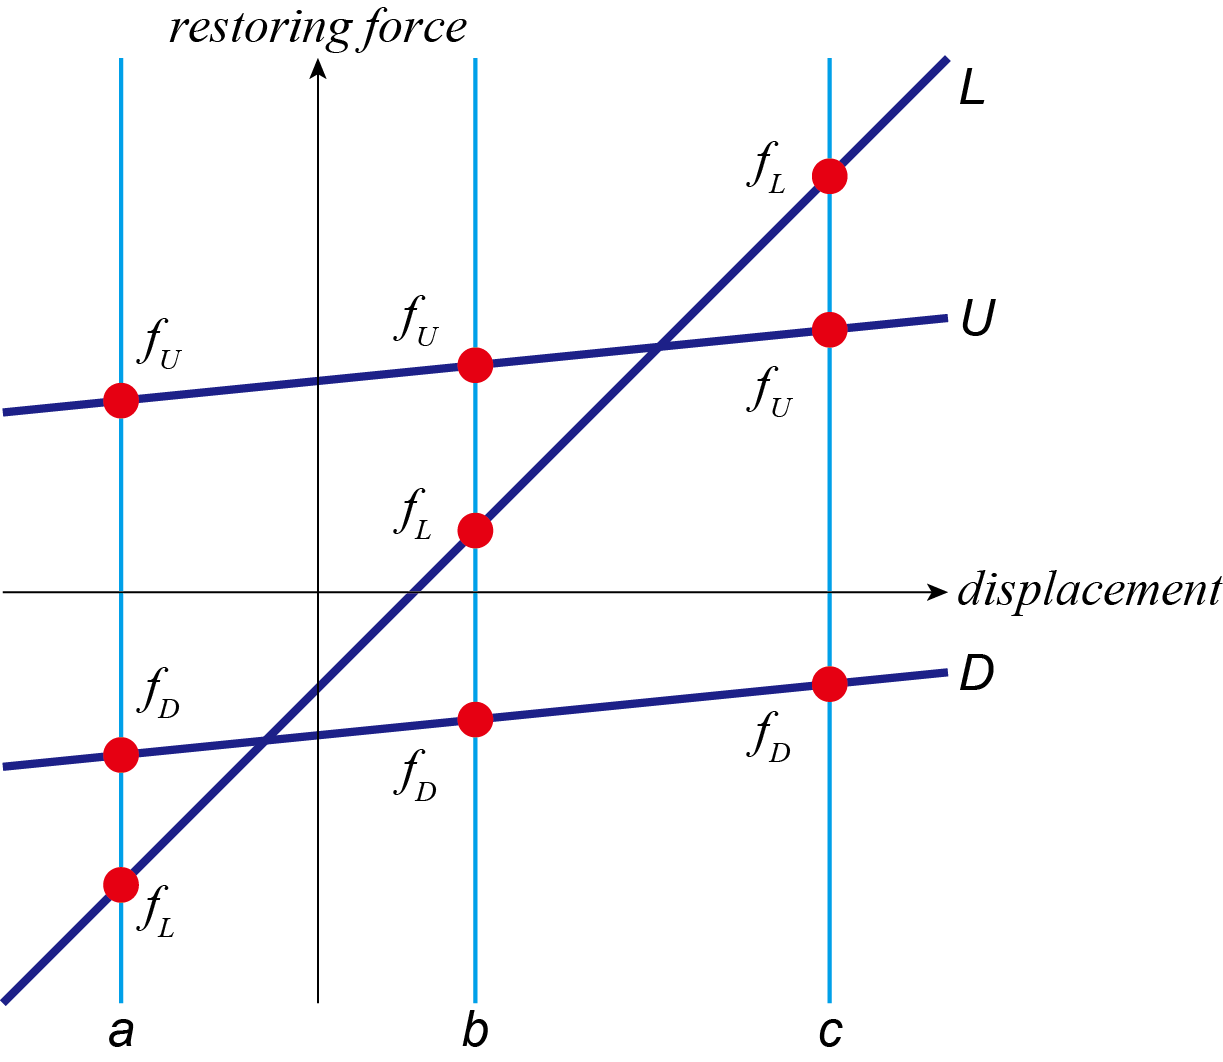 calculation scheme for bilinear model